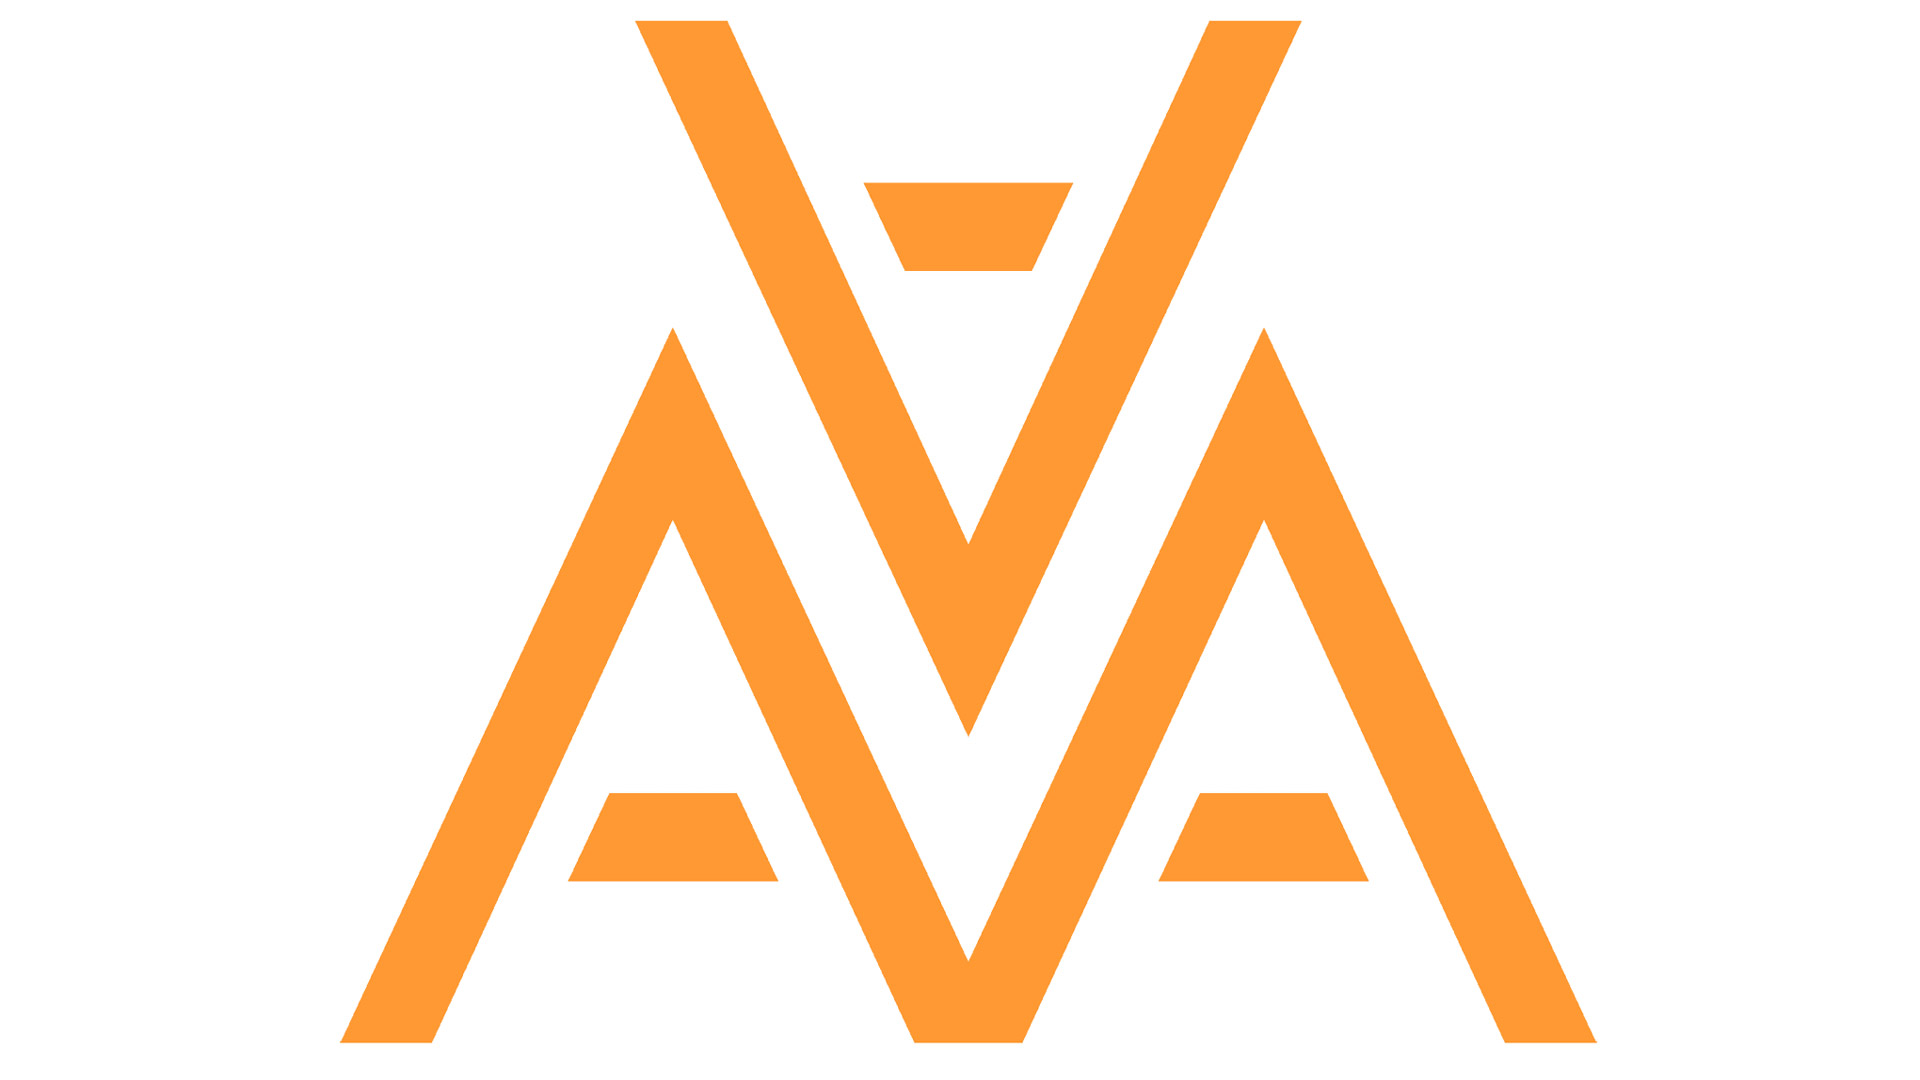 Das Logo des Veranstalters, der Analogue Audio Association (Bild: Analogue Audio Association)